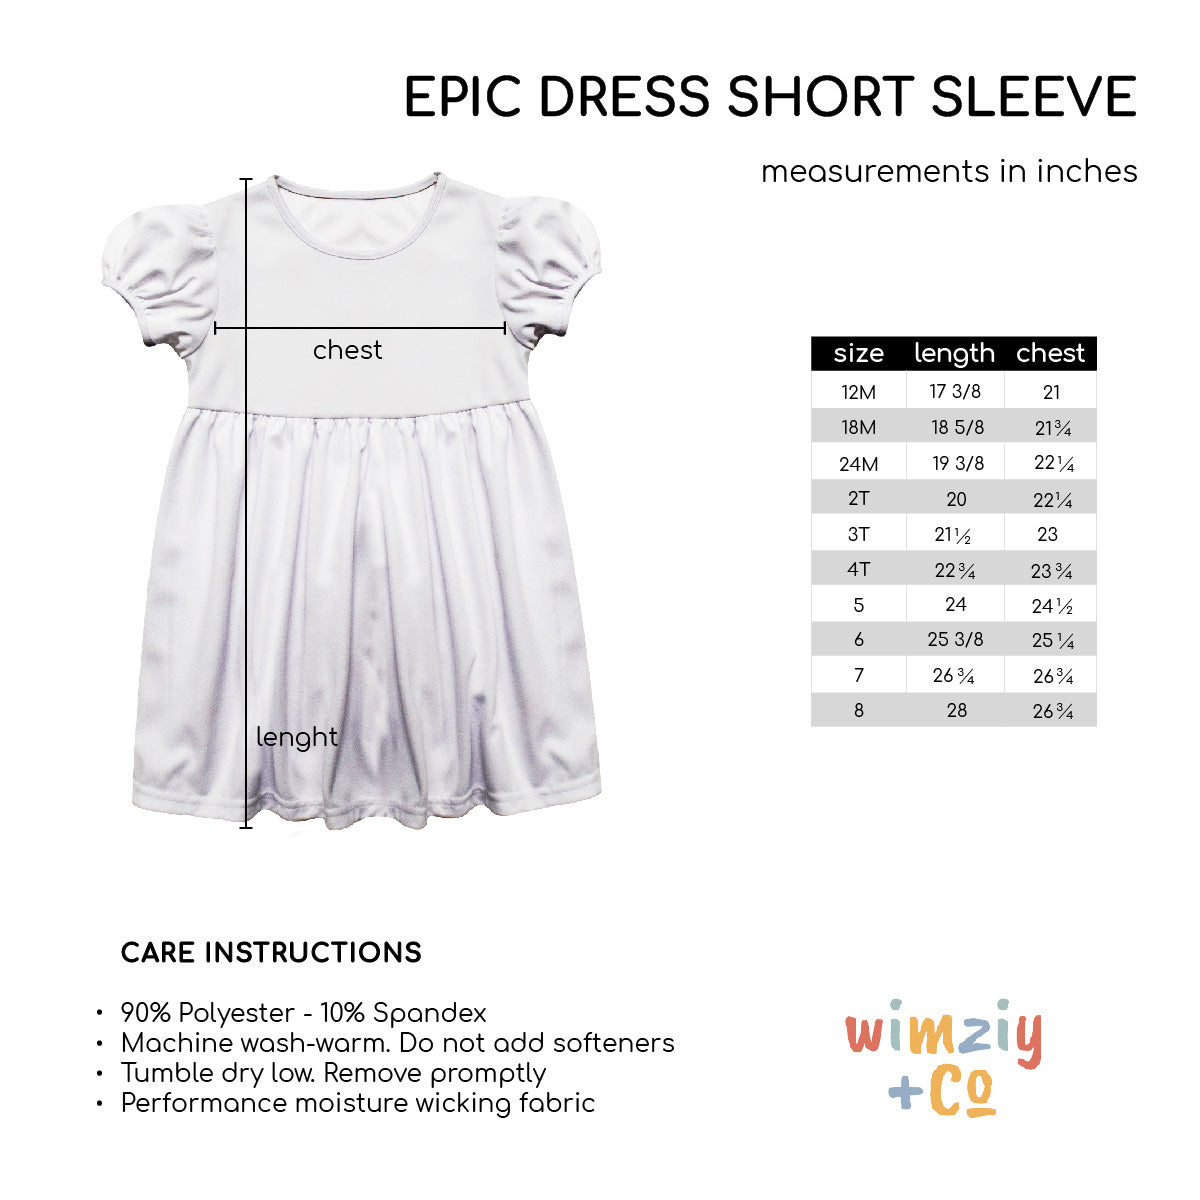 Dots Light Brown Short Sleeve Epic Dress - Wimziy&Co.